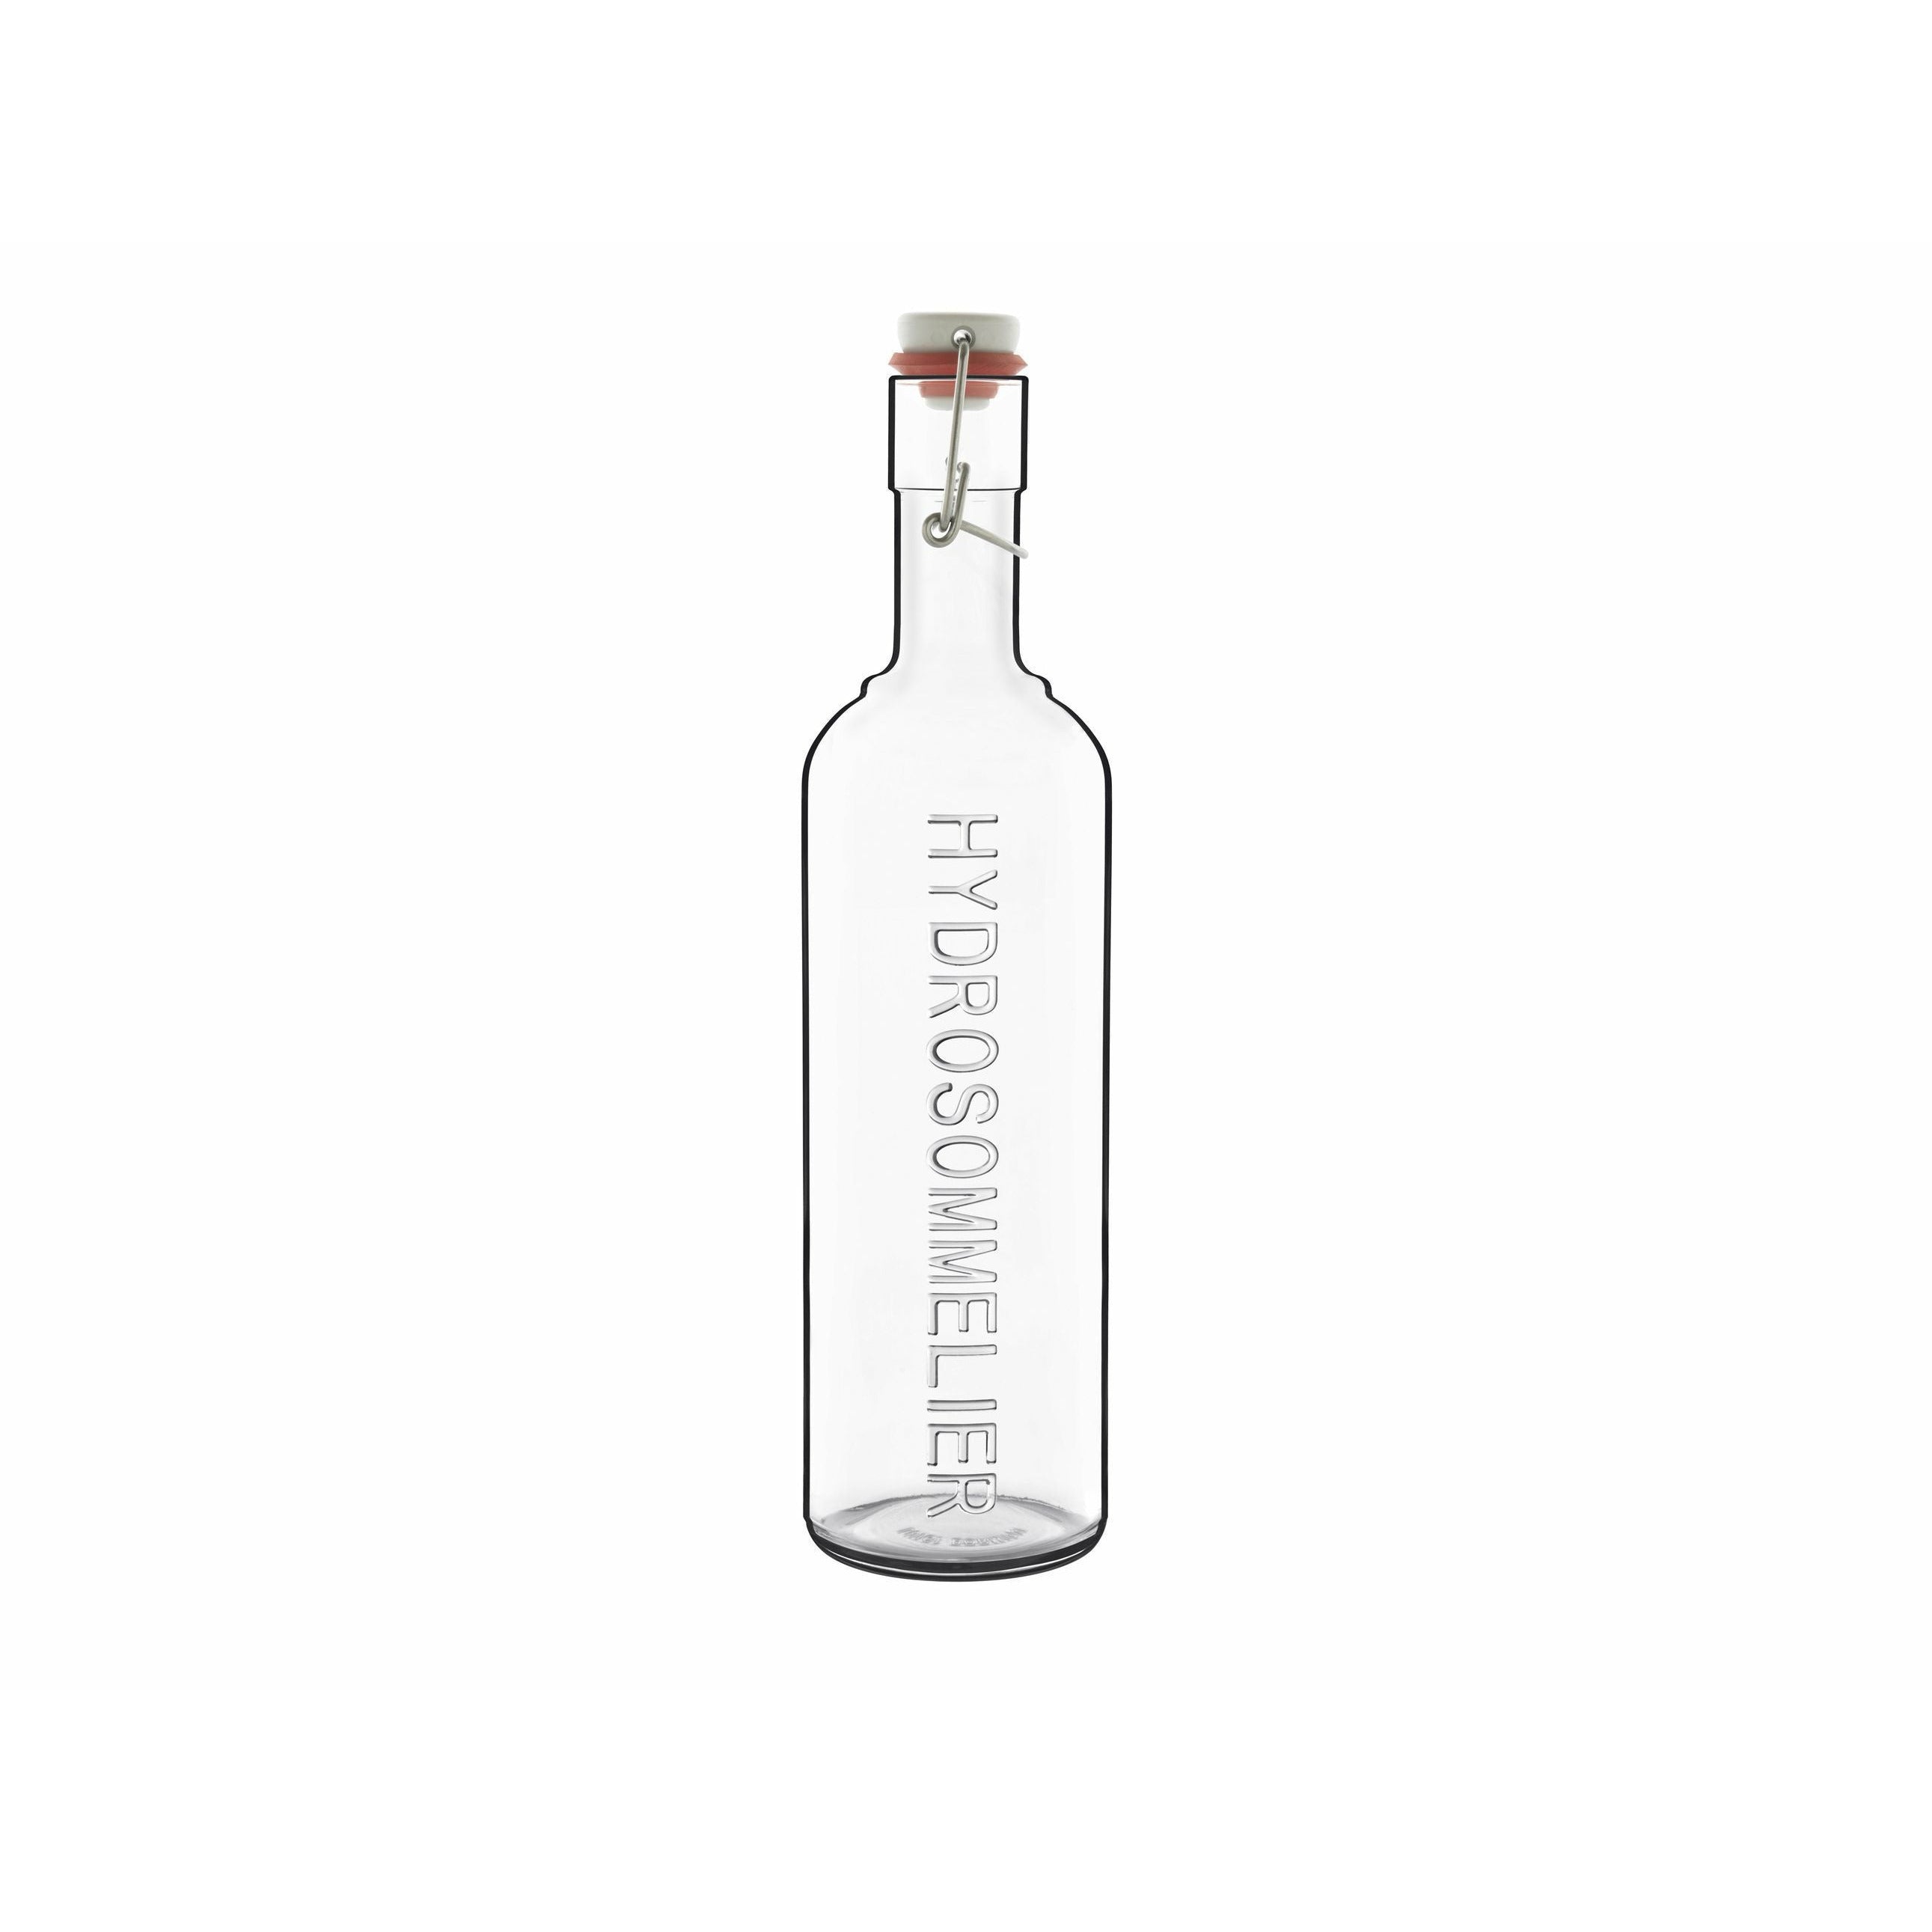 Luigi Bormioli Hydrosommelier Spirits Bottle With Patent Prop